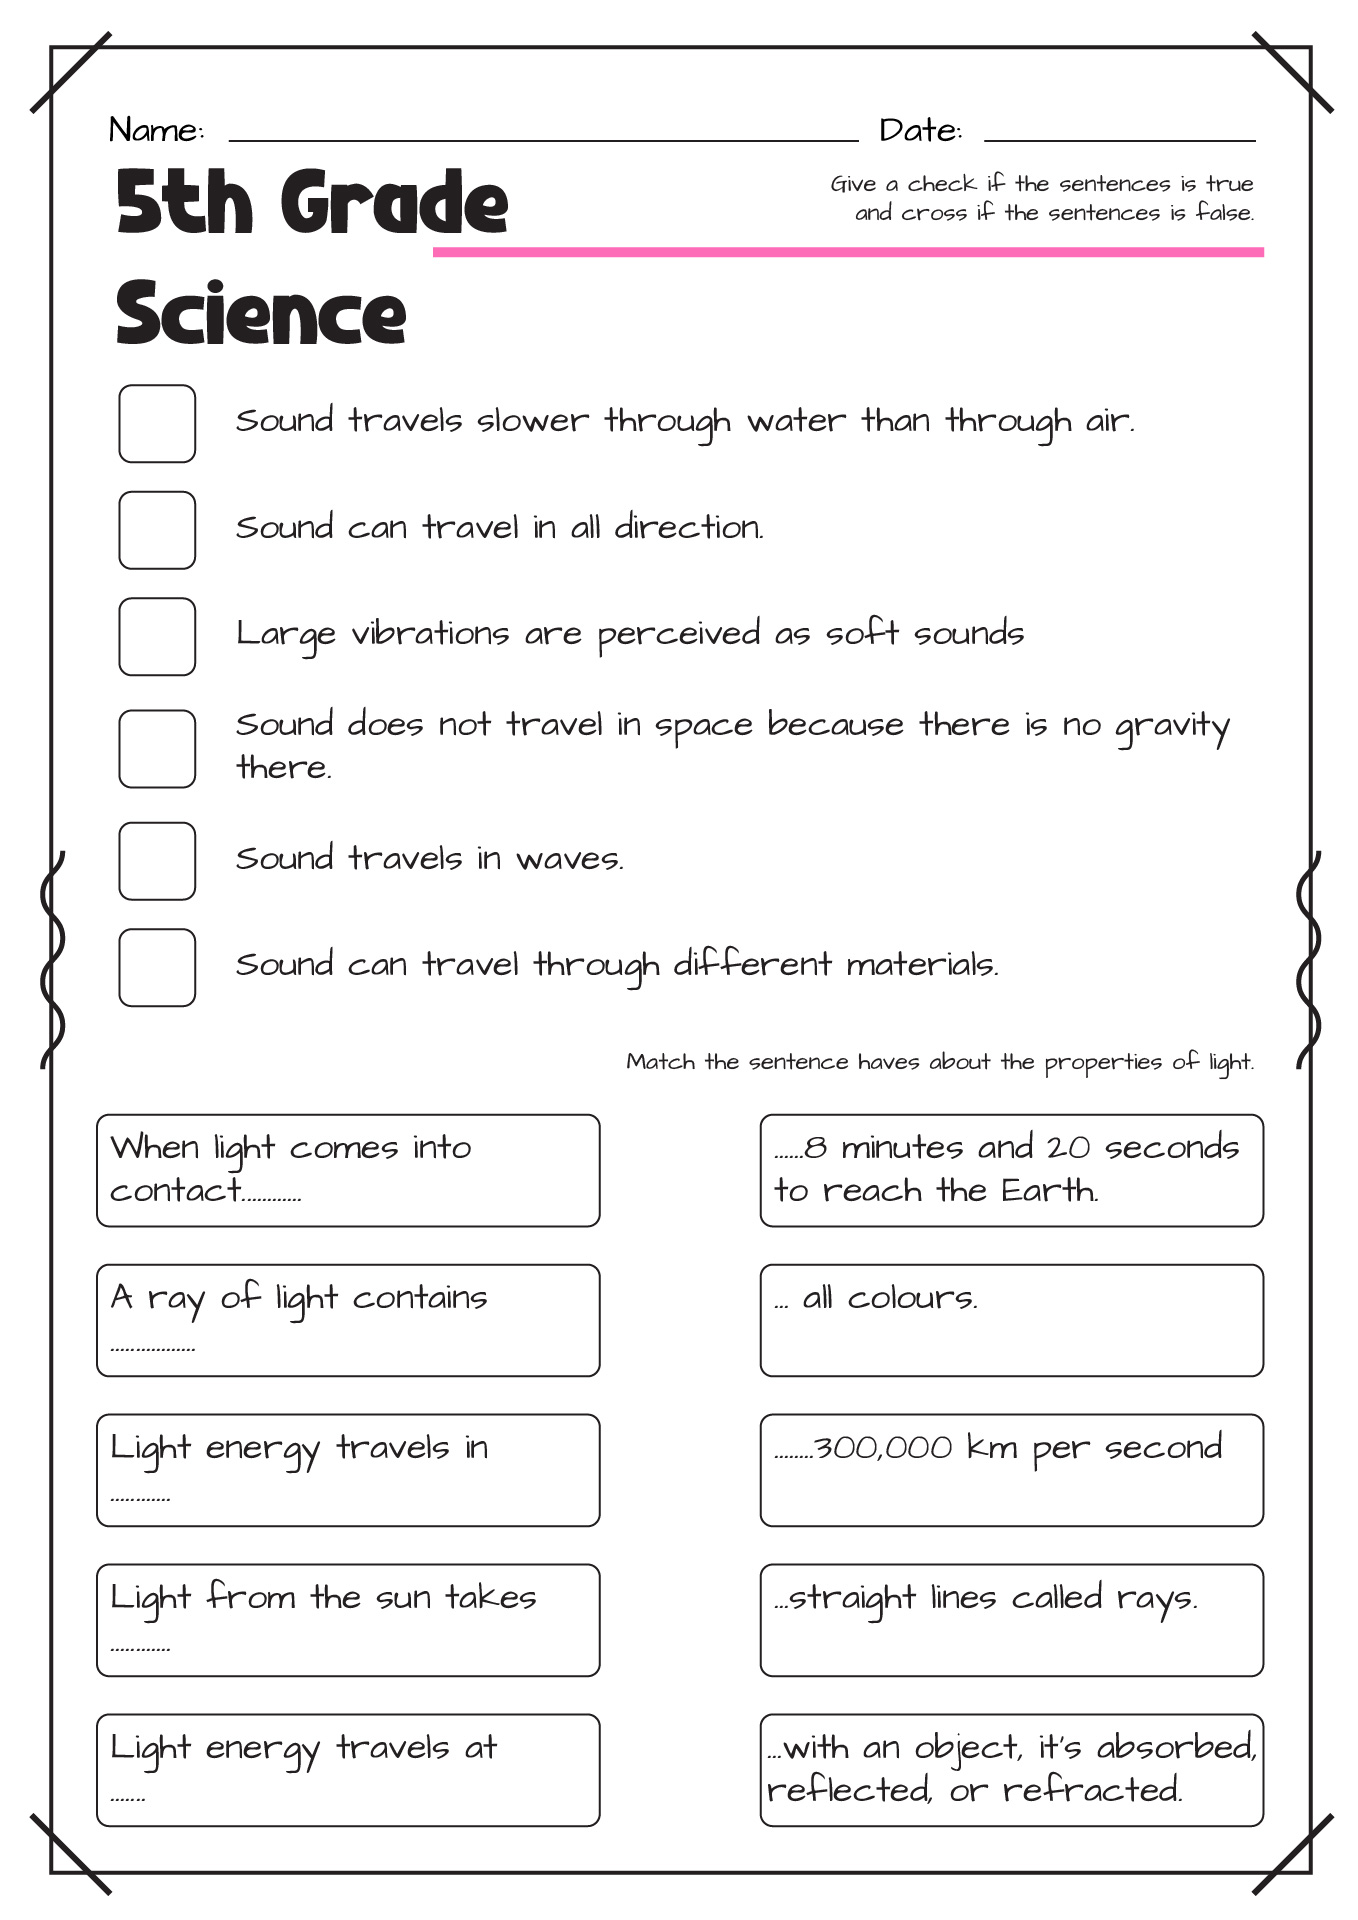 5th Grade Science Worksheets Image